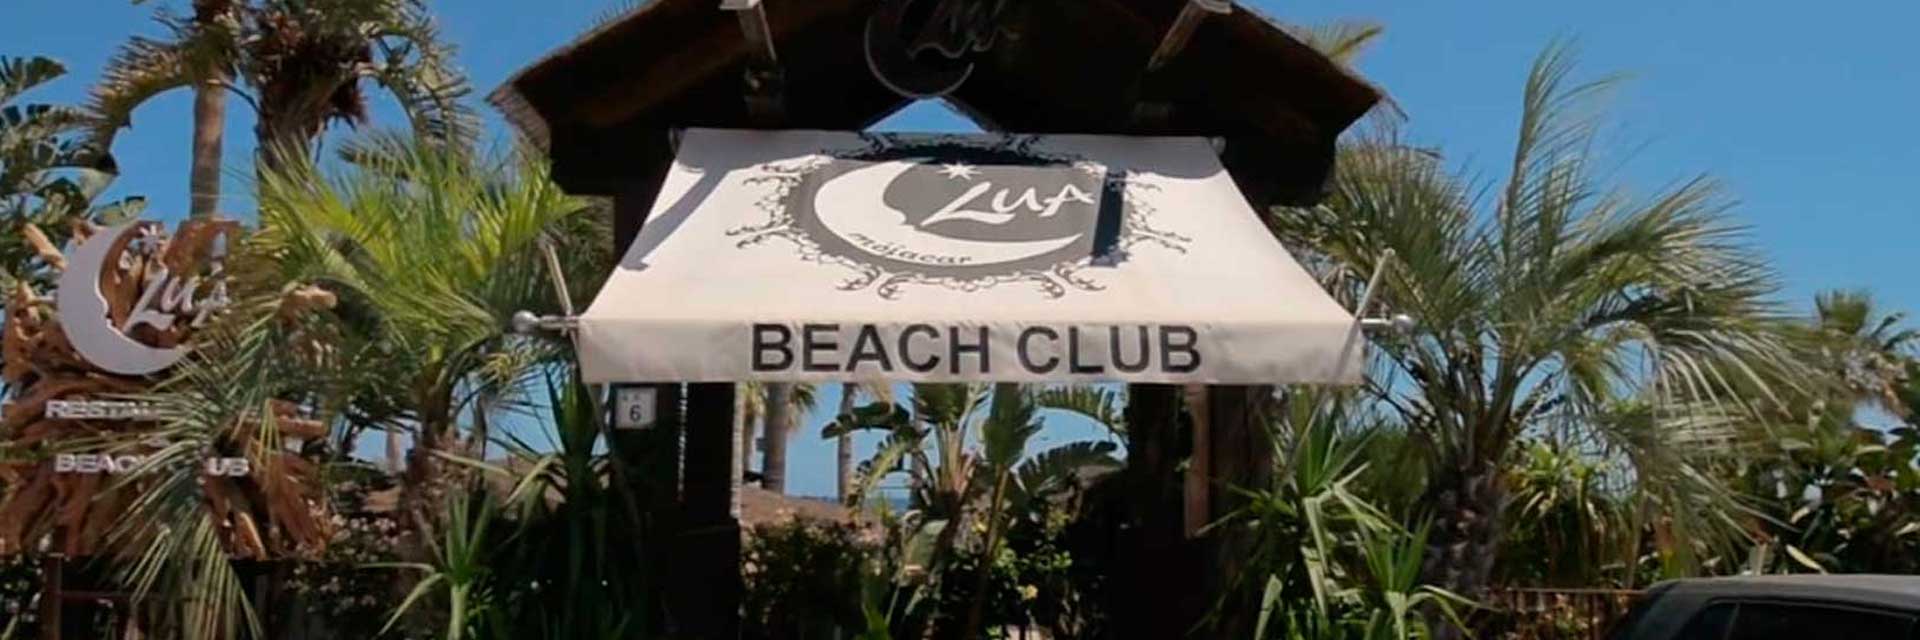 Discoteca Lua Beach Club Mojácar ▶ Almería